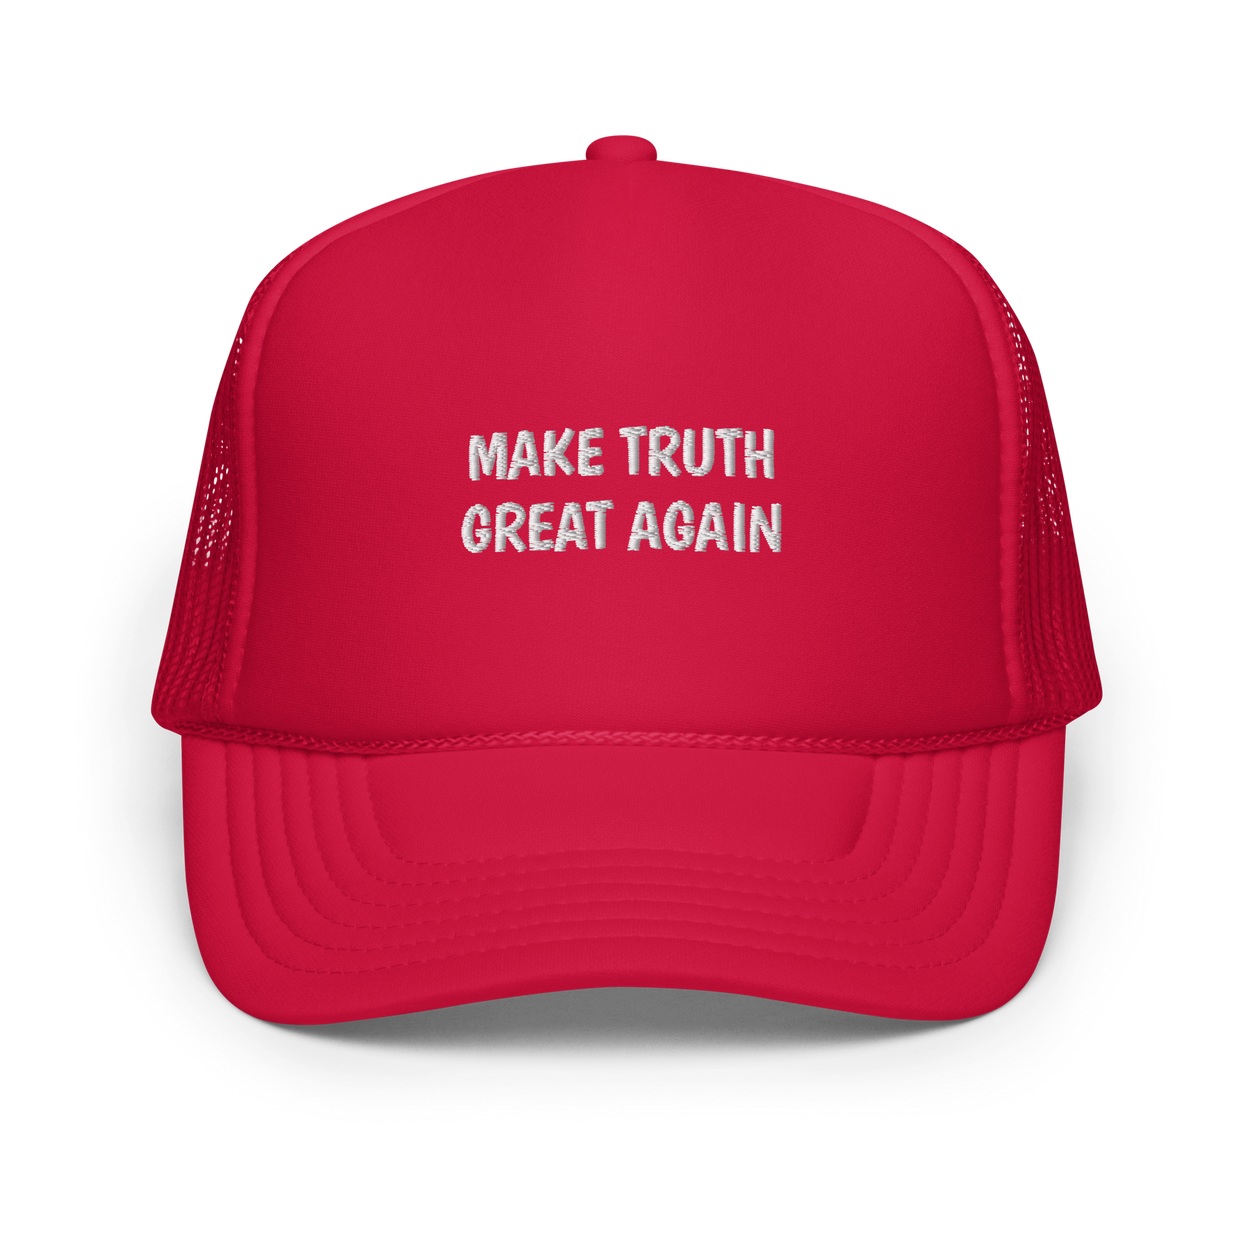 MTGA Make Truth Great Again Trucker Hat